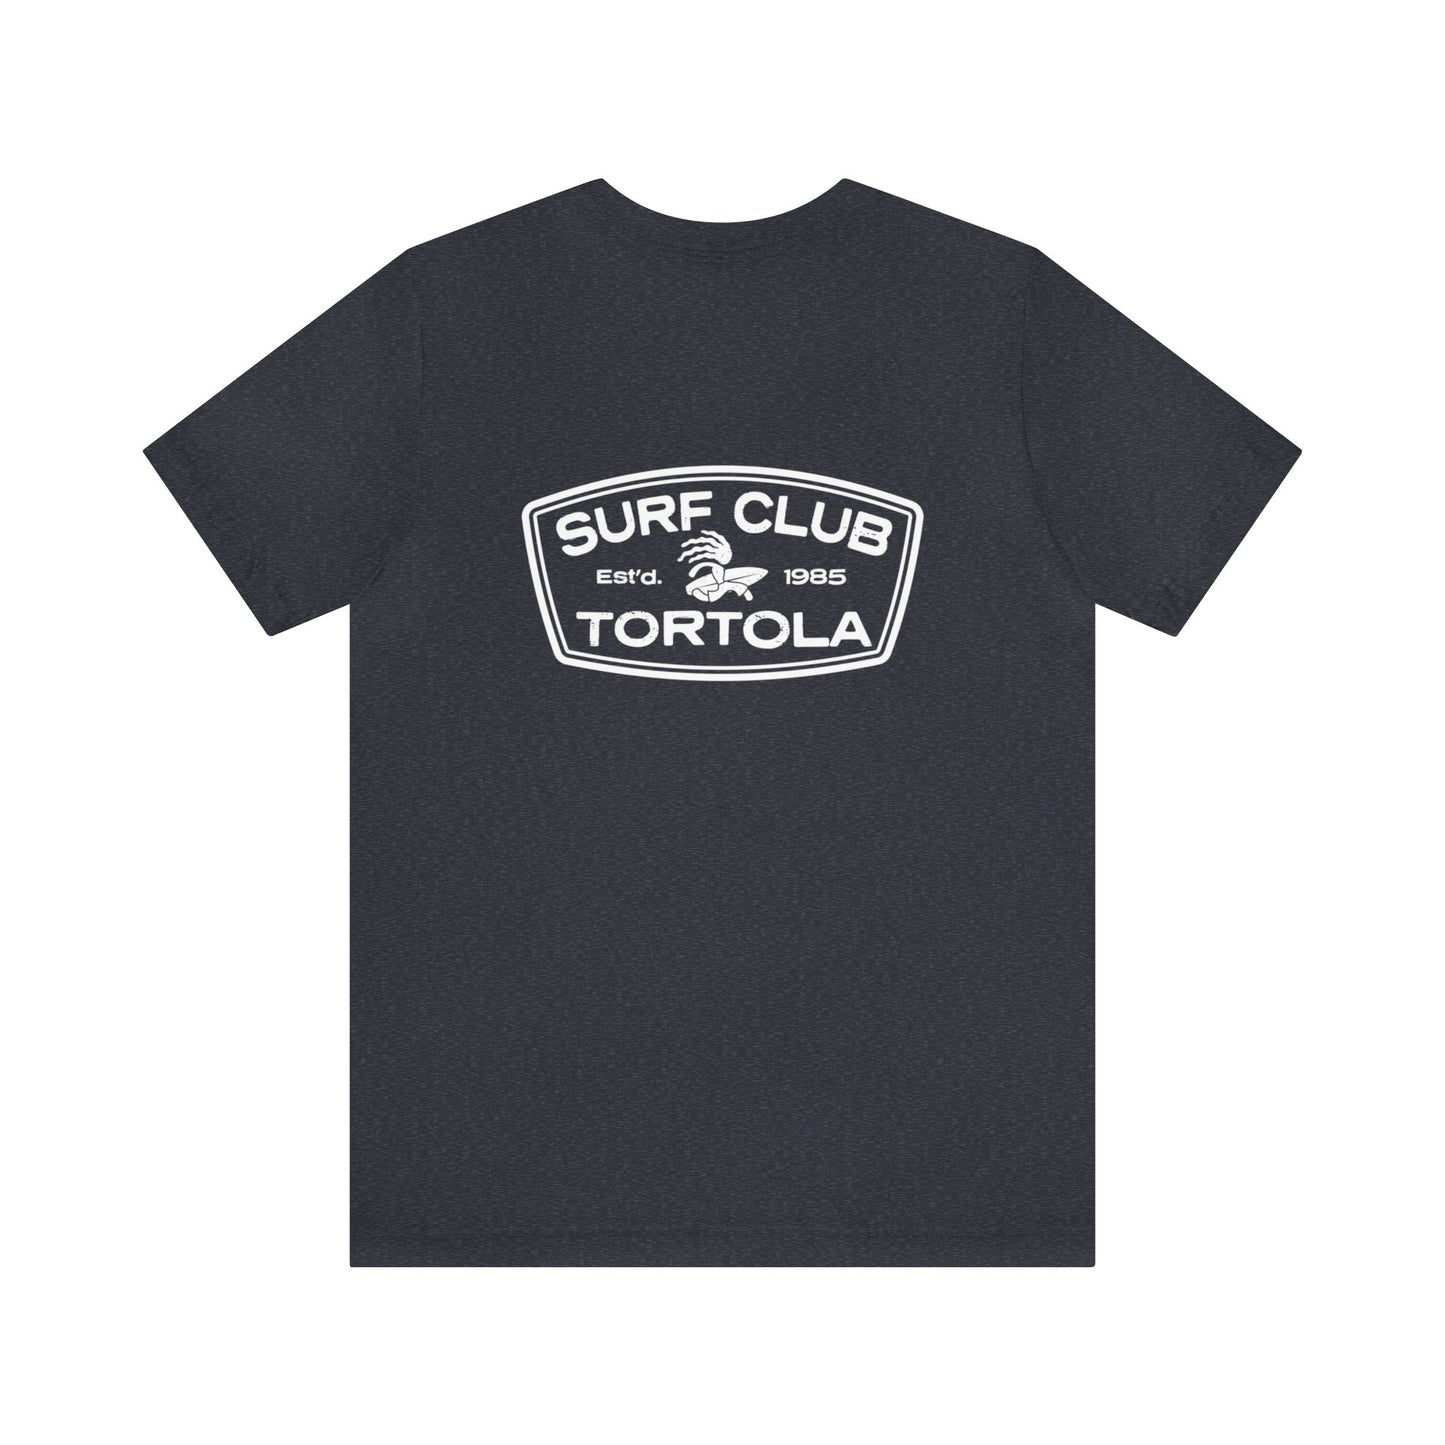 "Surf Club Tortola" Unisex S/S Tee